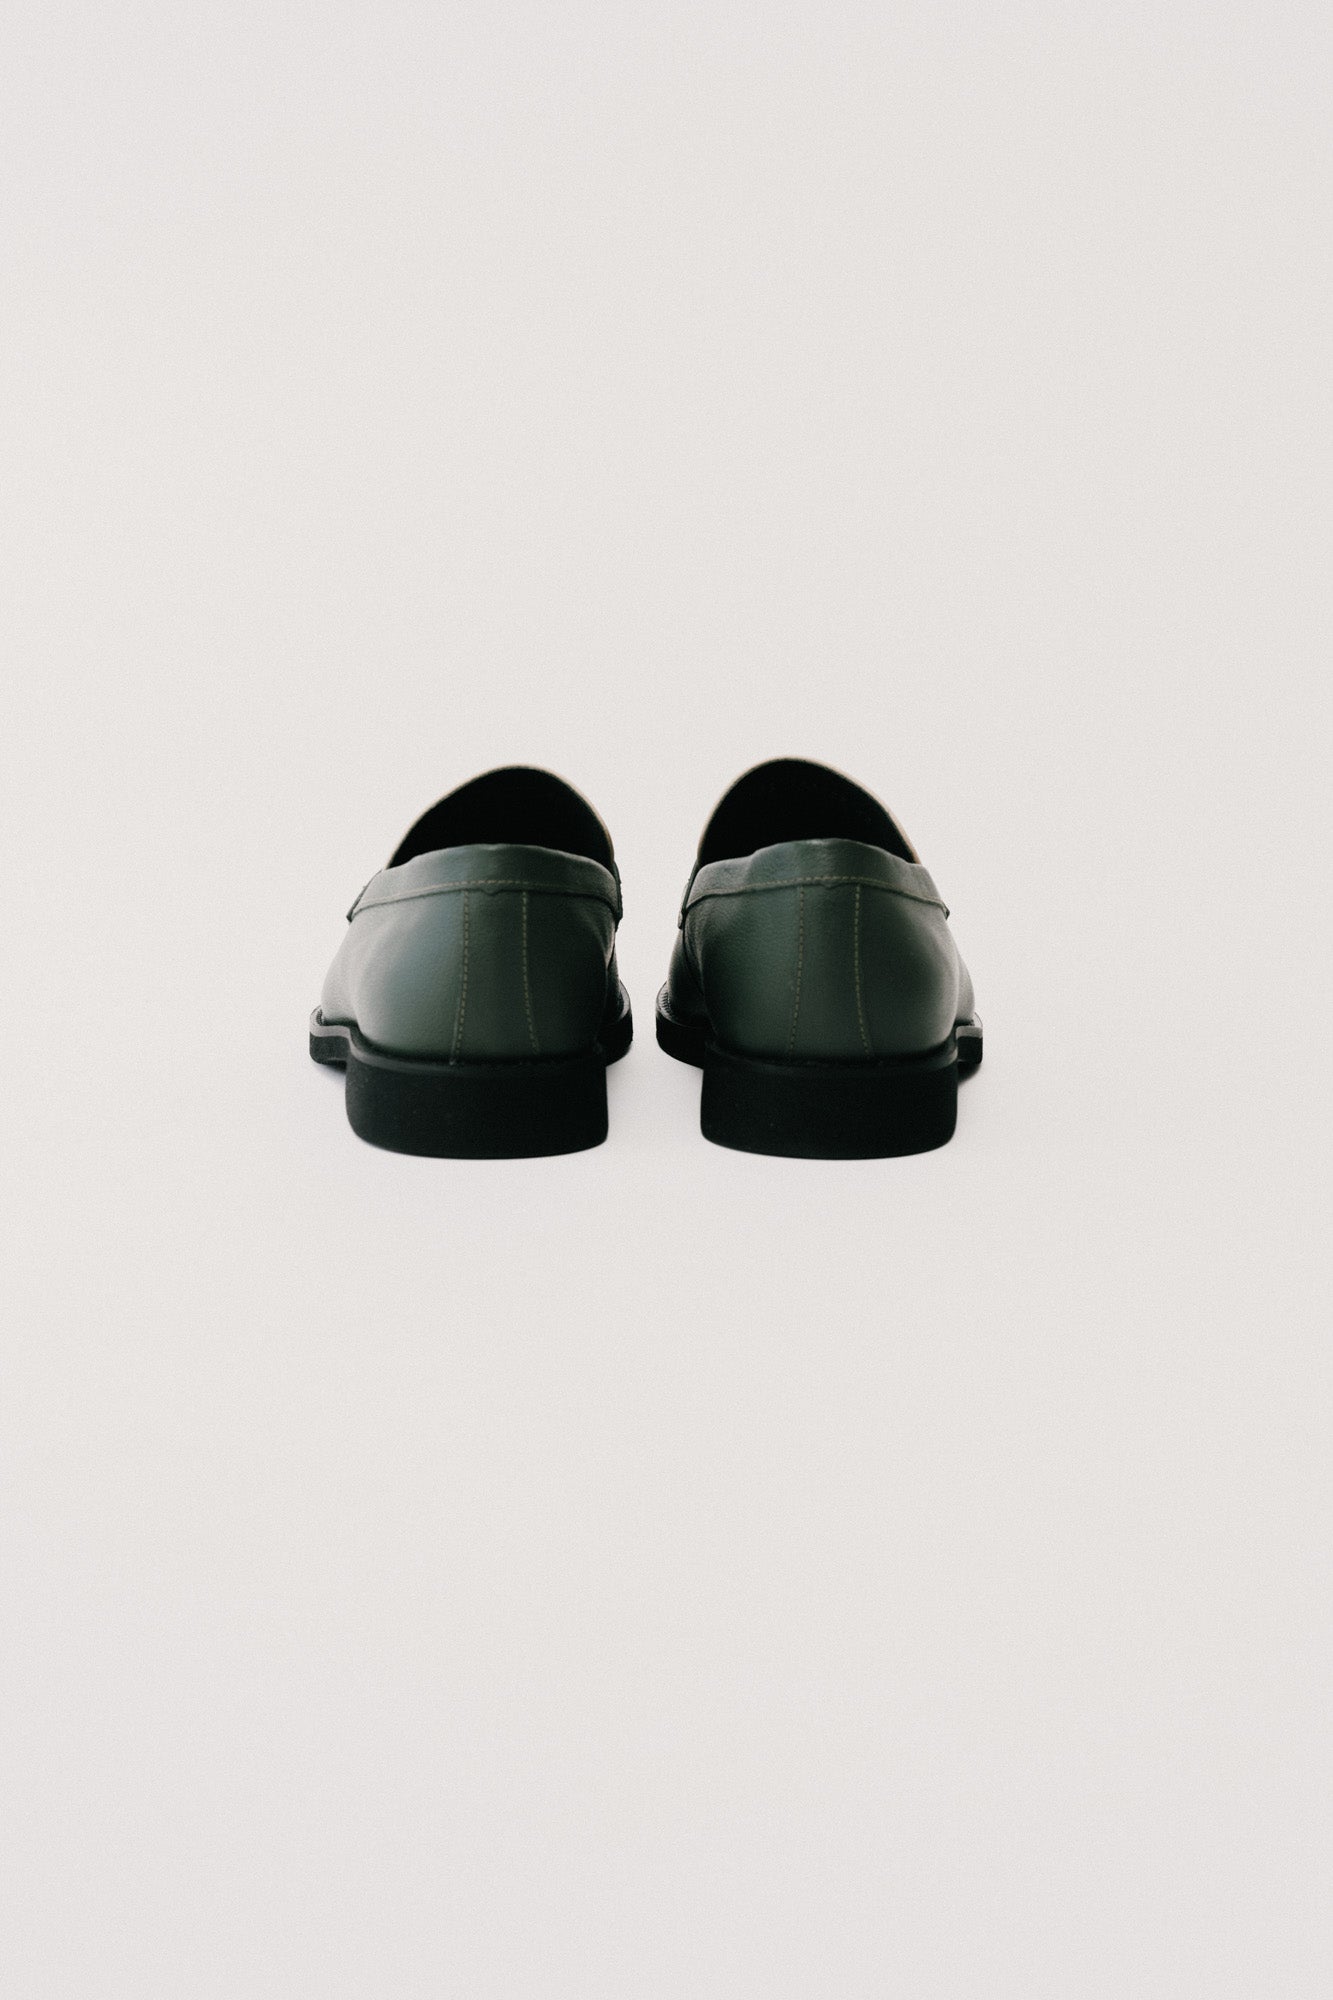 Sapato Penny Loafer Atlântico - Verde e Marfim